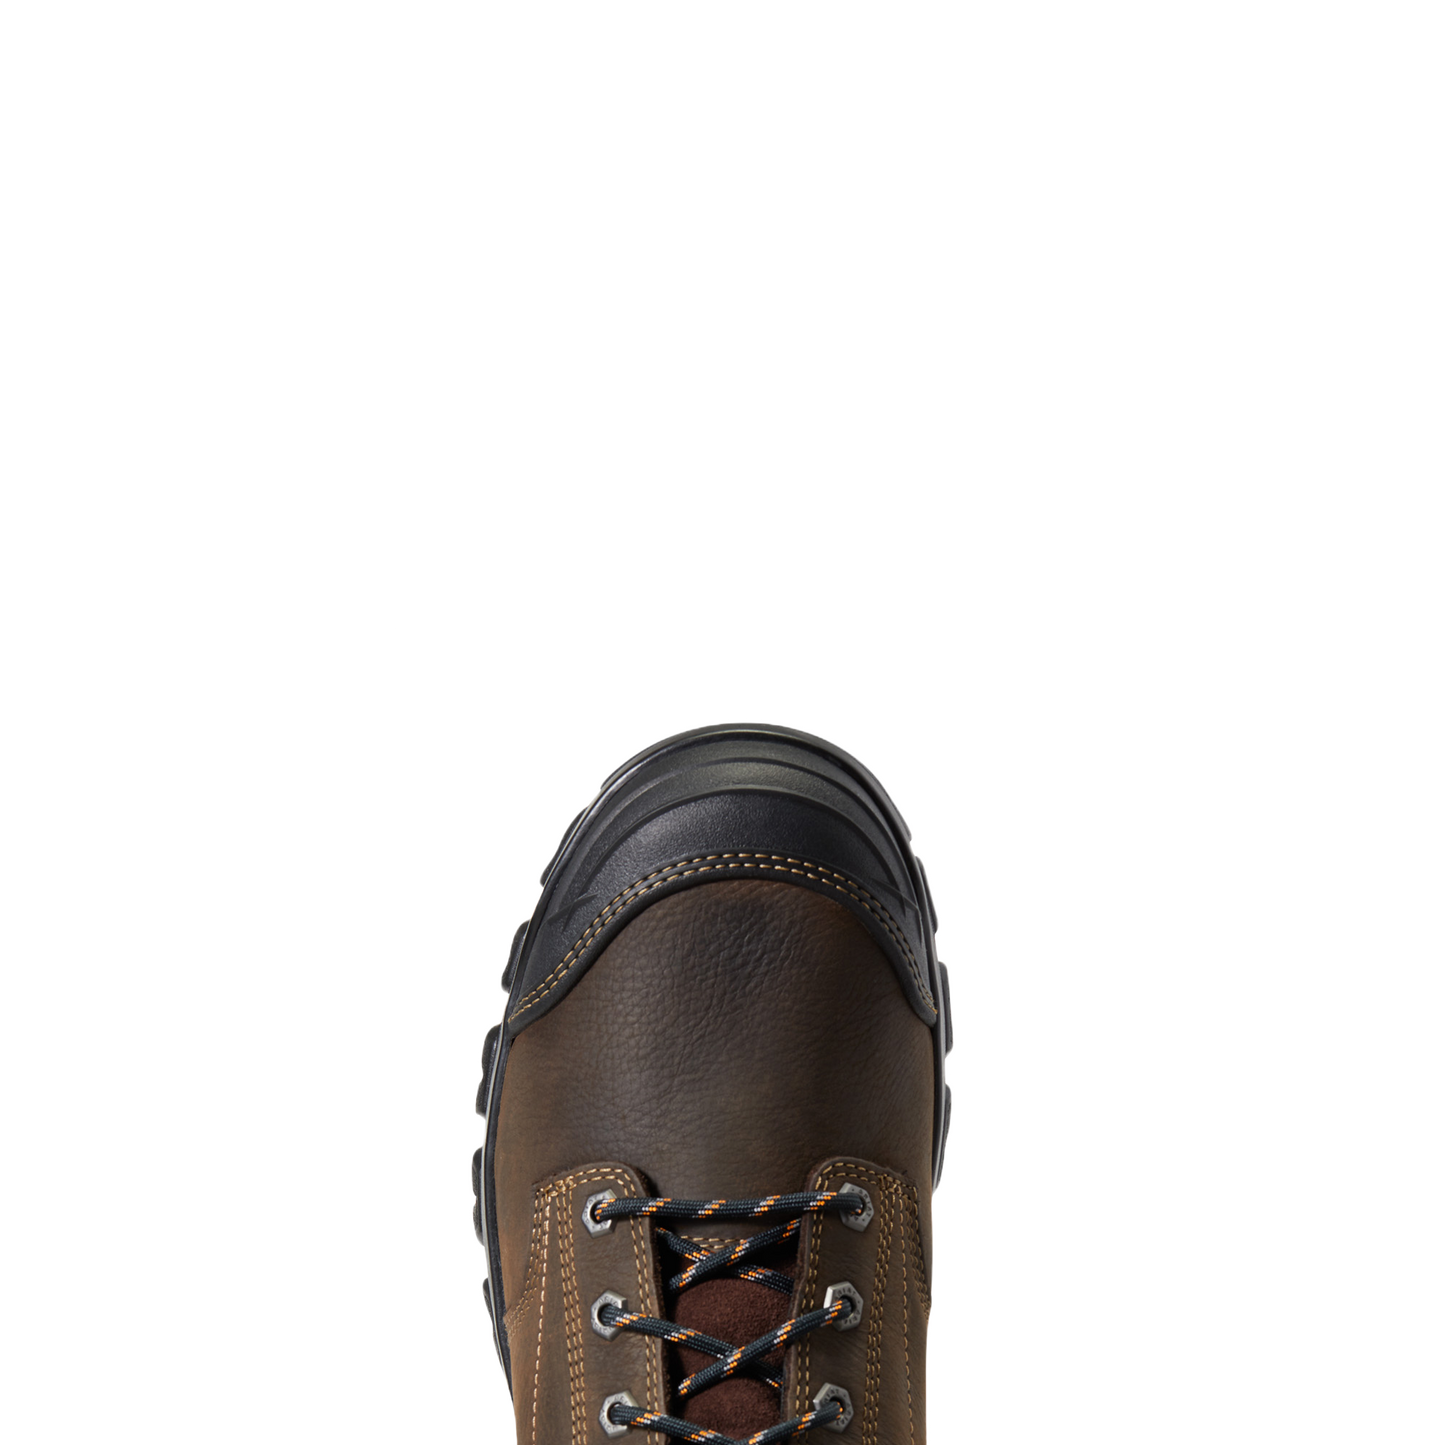 Ariat® Men's Treadfast 6" Waterproof Dark Brown Work Boots 10040266